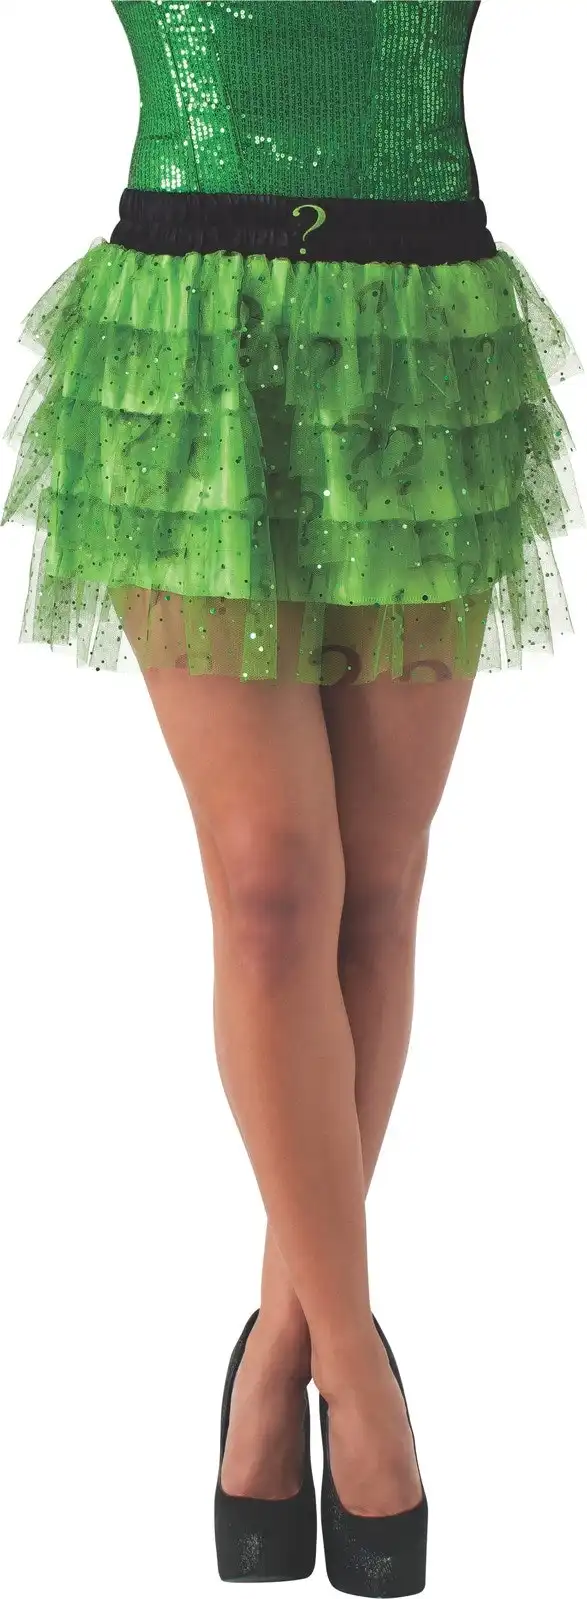 DC Comics Green The Riddler Tutu Skirt Penguin Two Face Adult Size Standard